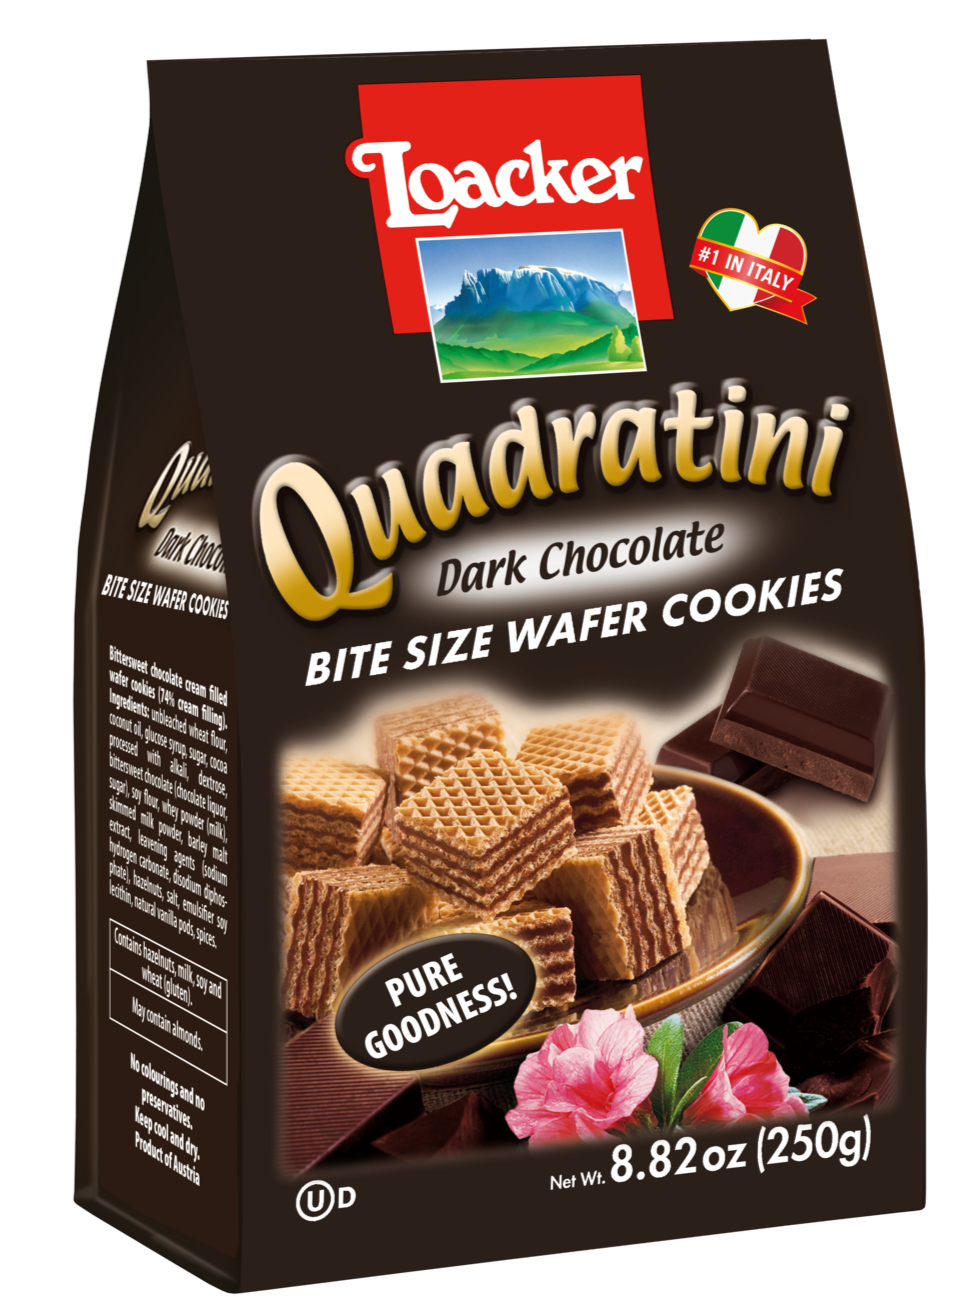 Loacker Quadratini Dark Chocolate Wafer 250g